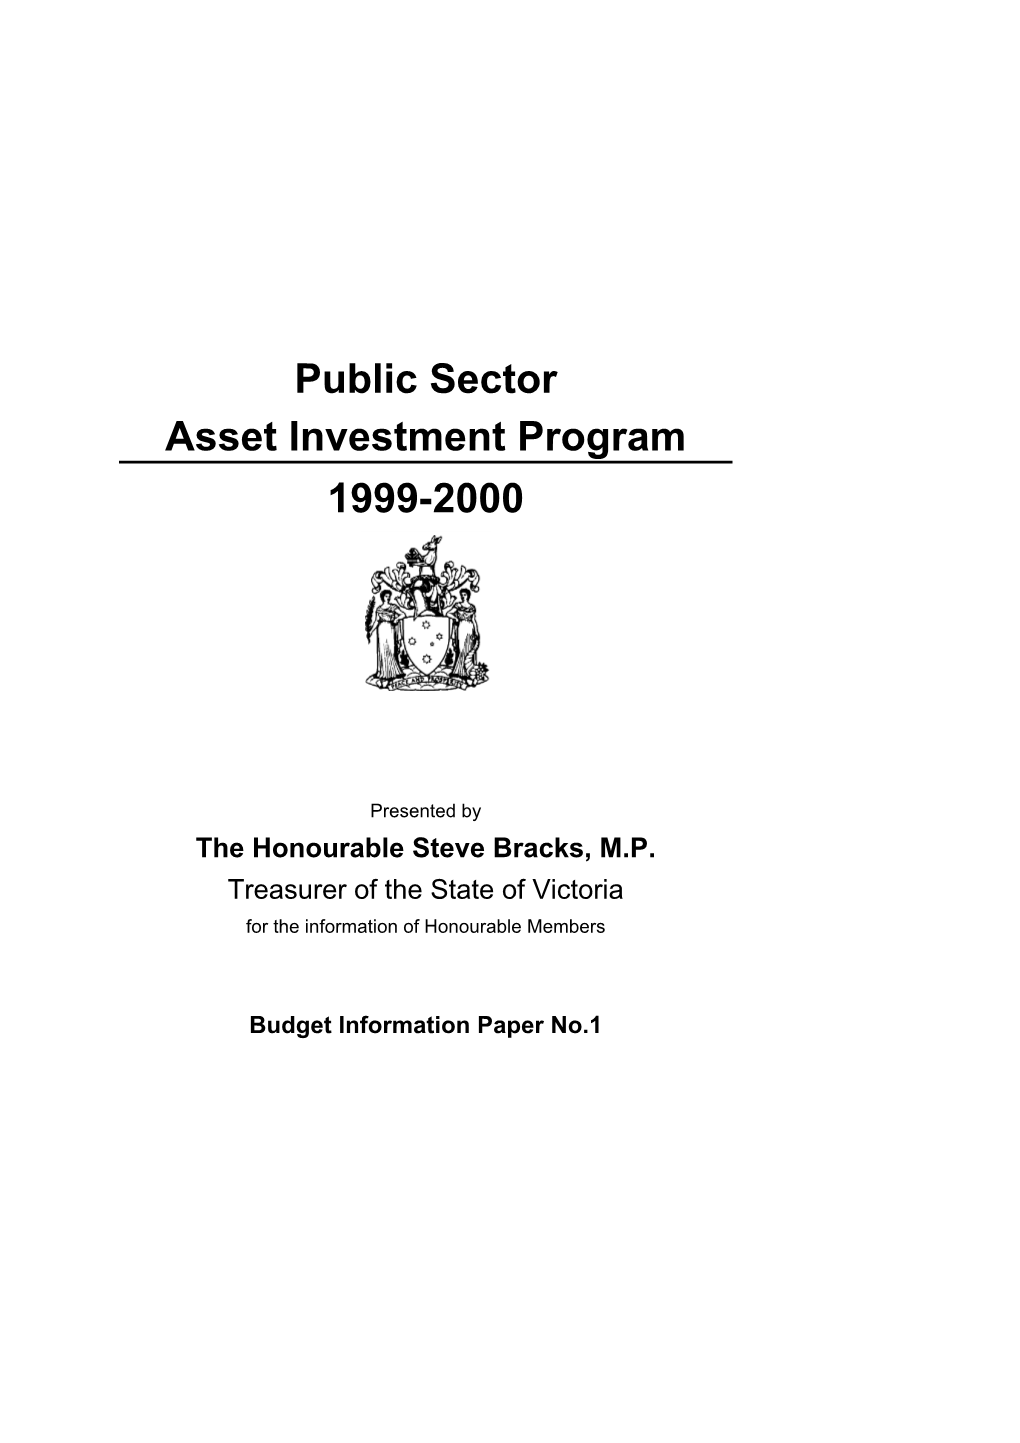 Public Sector Asset Investment Program 1999-2000